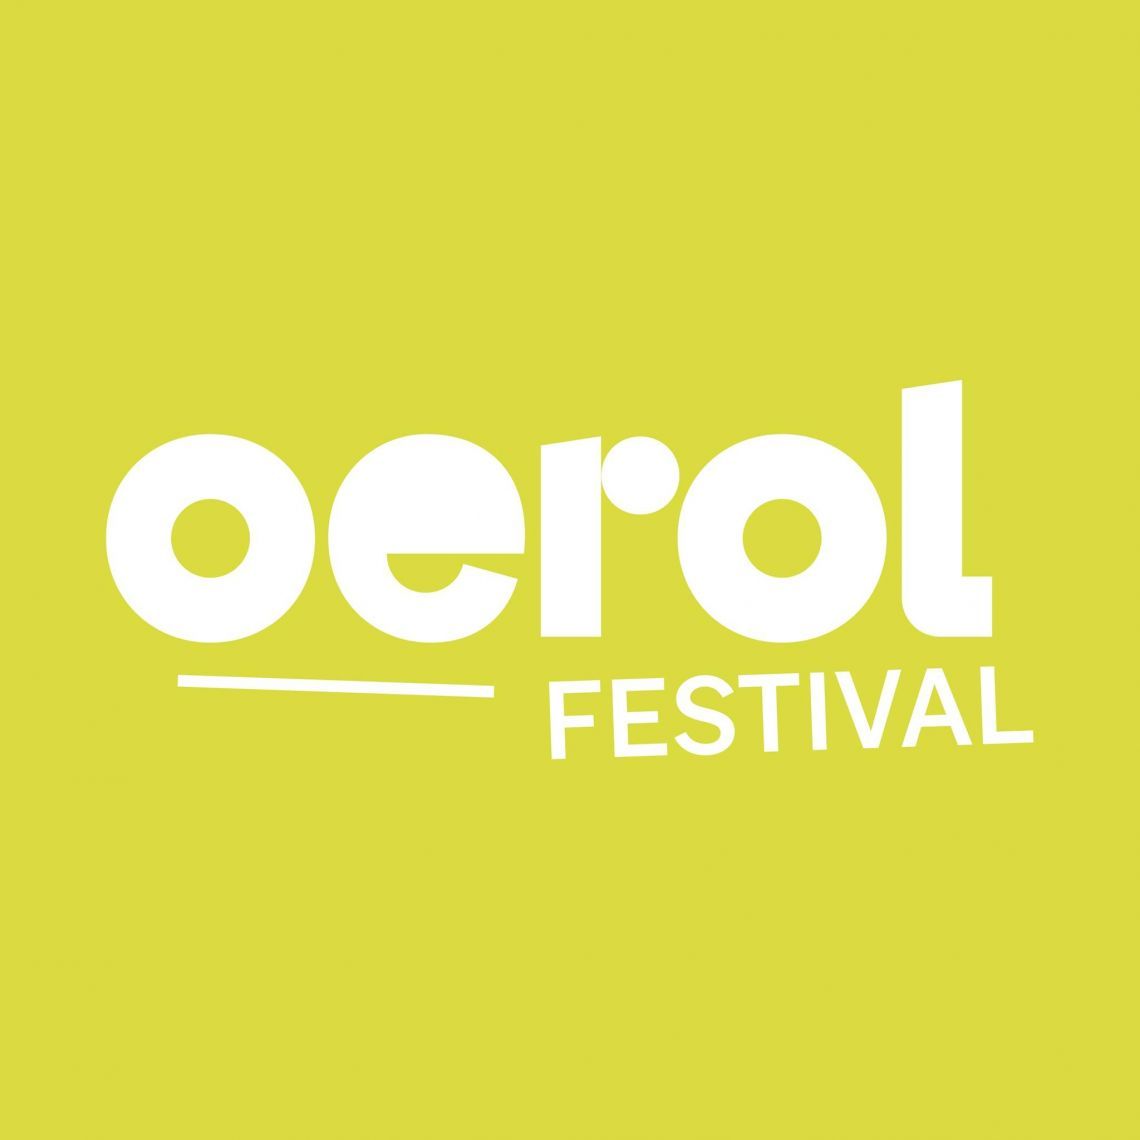 Oreol Festival